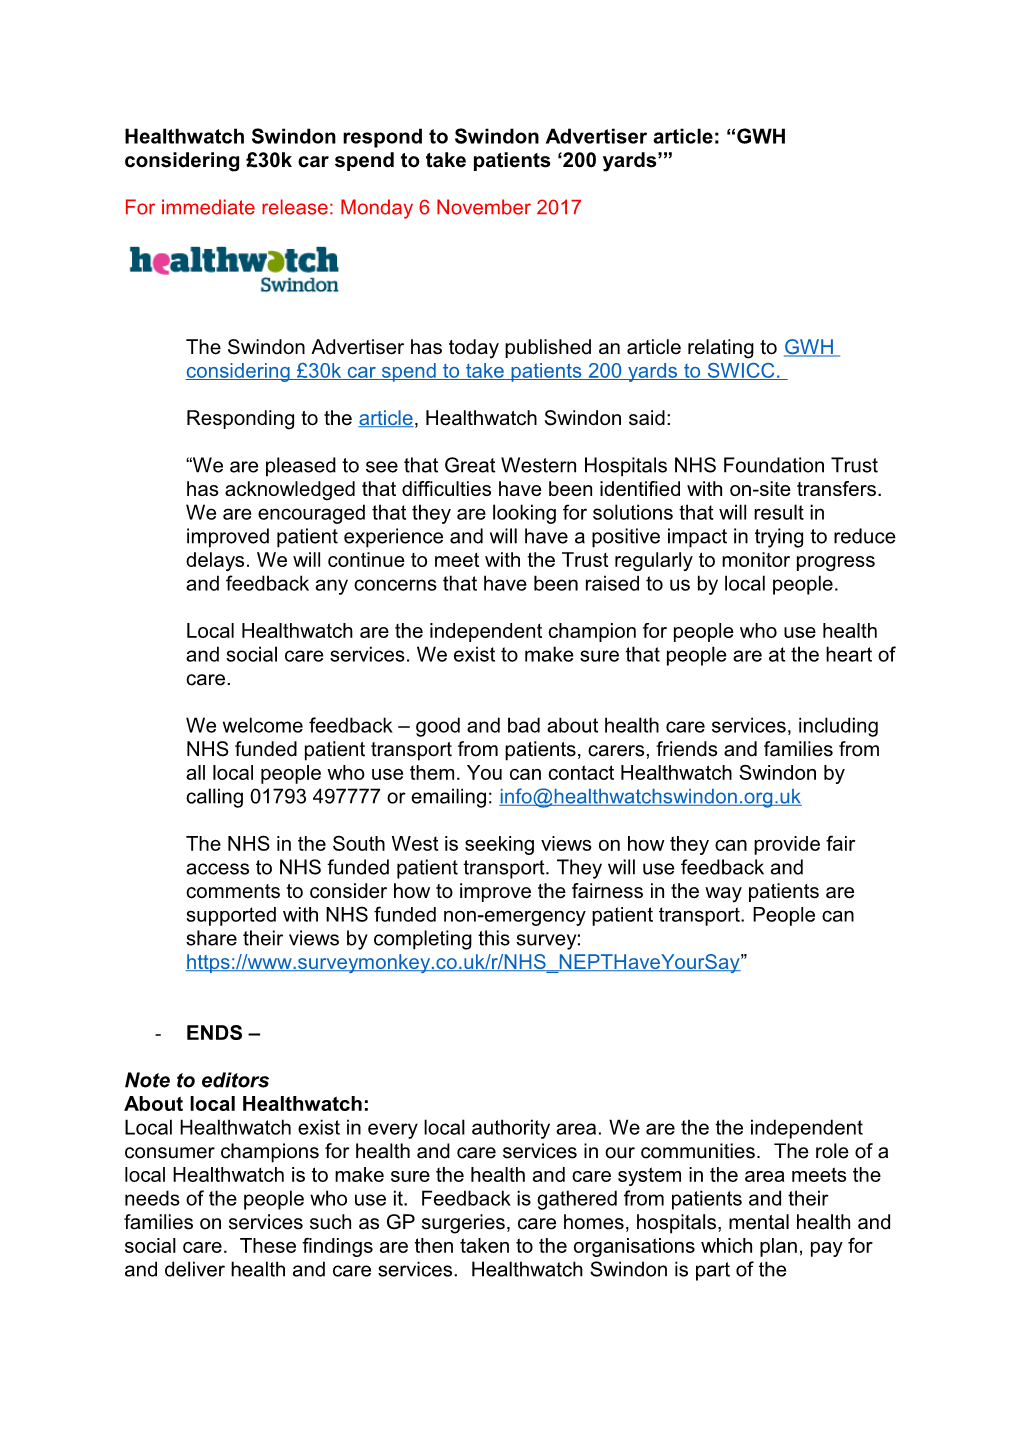 Healthwatch Swindon Respond to Swindon Advertiser Article: GWH Considering 30K Car Spend